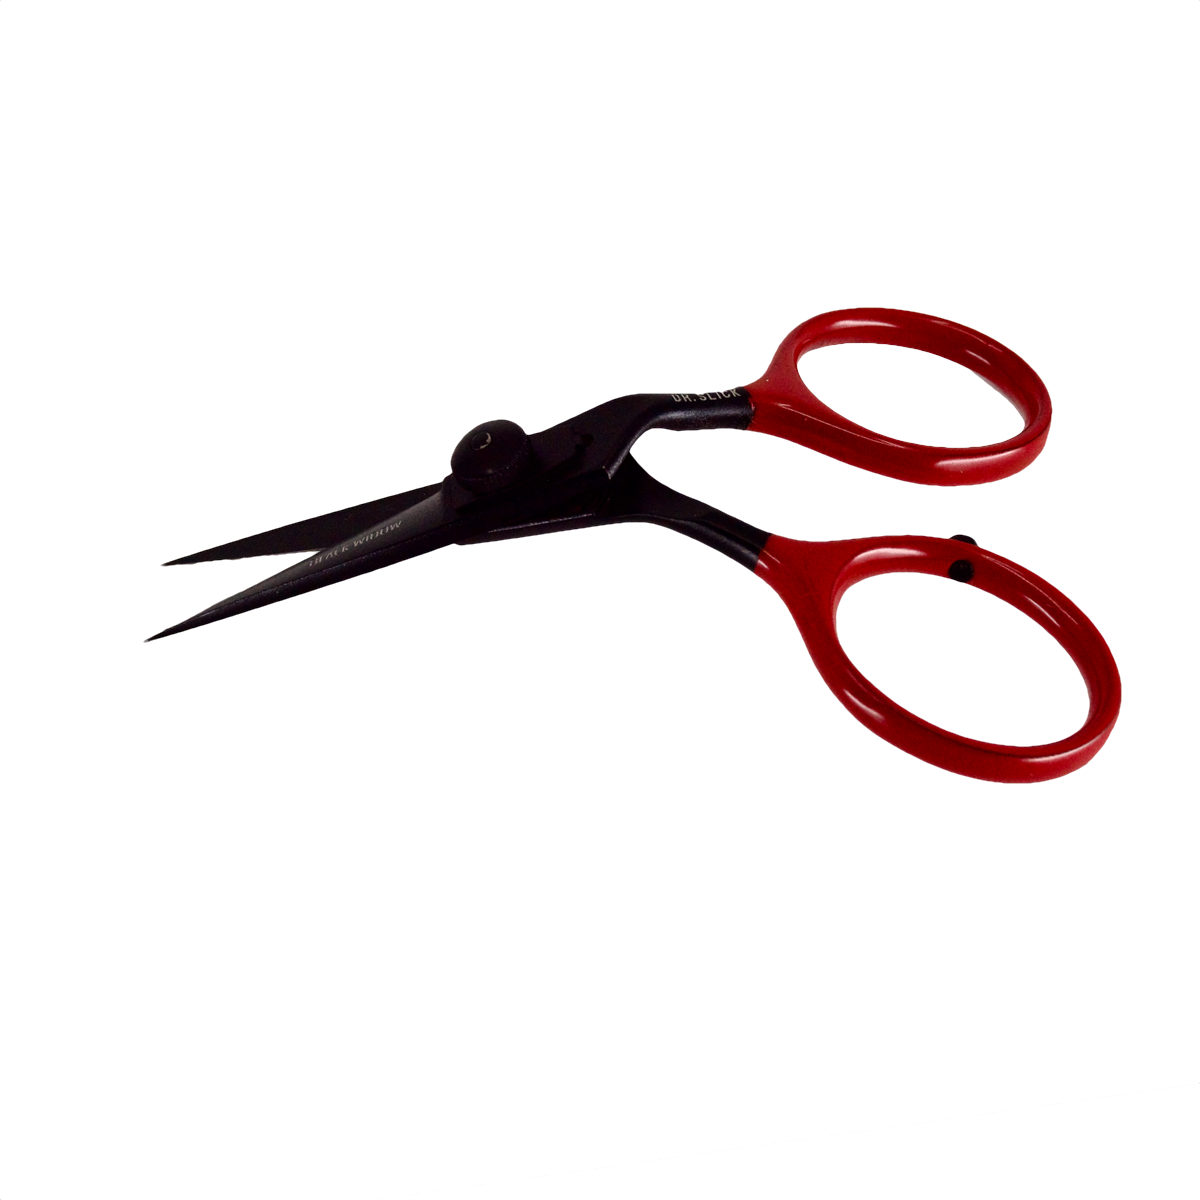 Dr. Slick Black Widow Razor Scissors- 4 All-Purpose